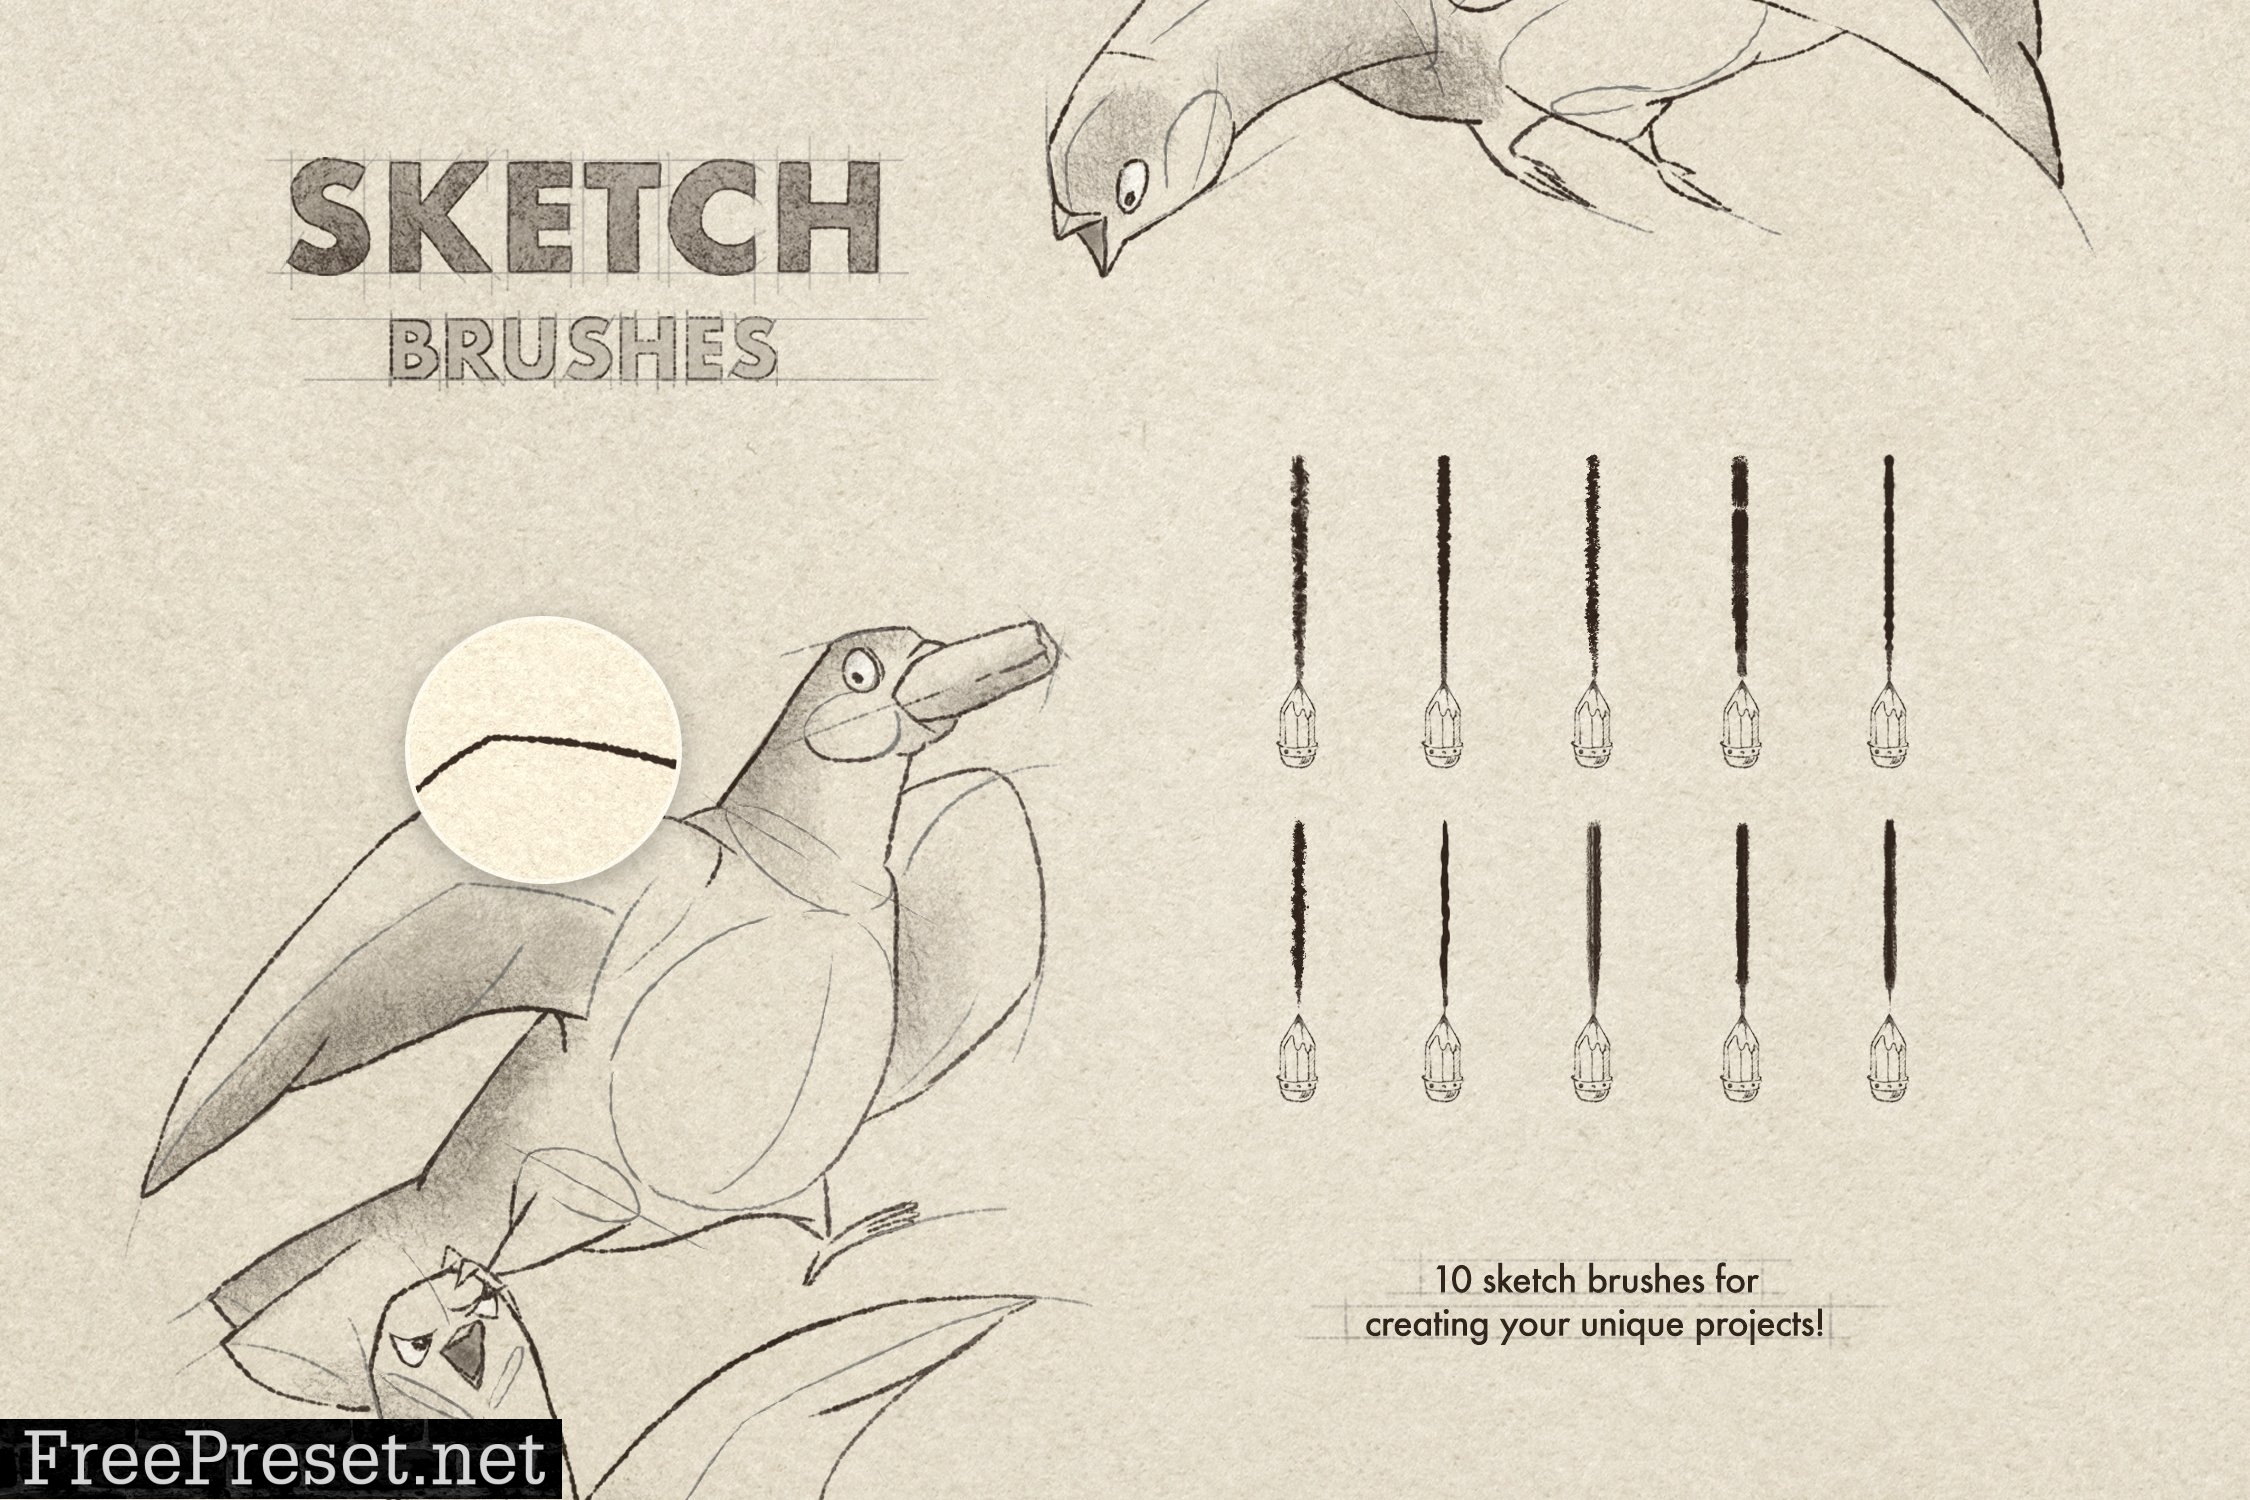 Sketch & Pencil Procreate Brushes 6505262